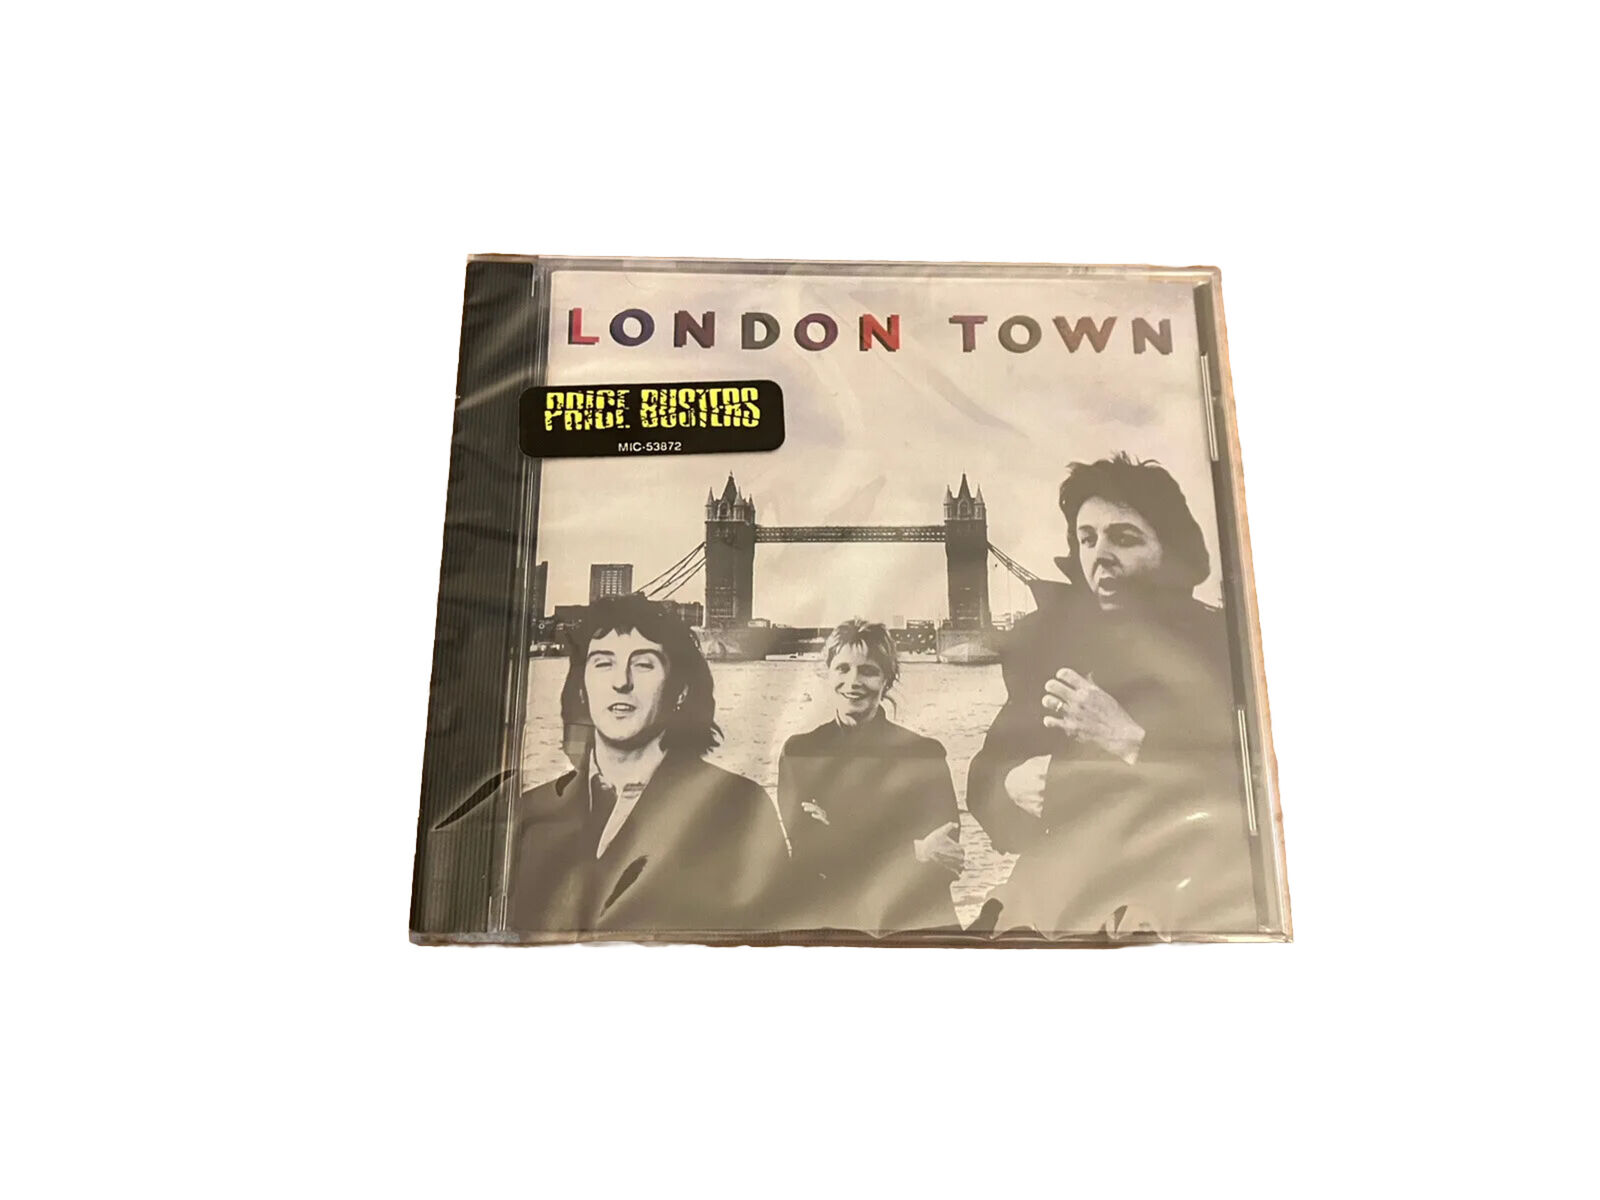 London Town: Wings (CD, 1989) Paul McCartney, Rare, Brand New